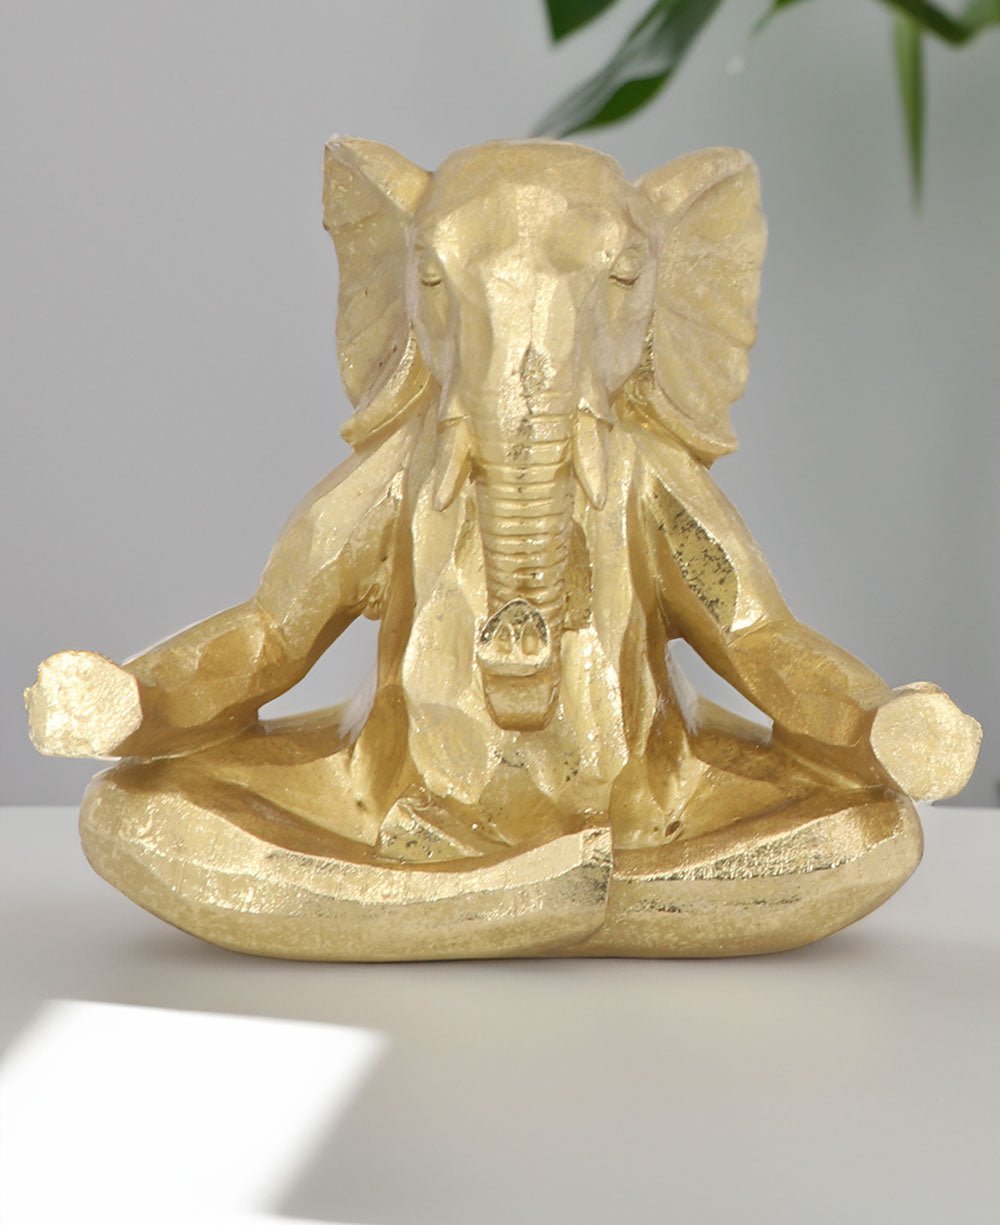 Yoga meditating elephant statue